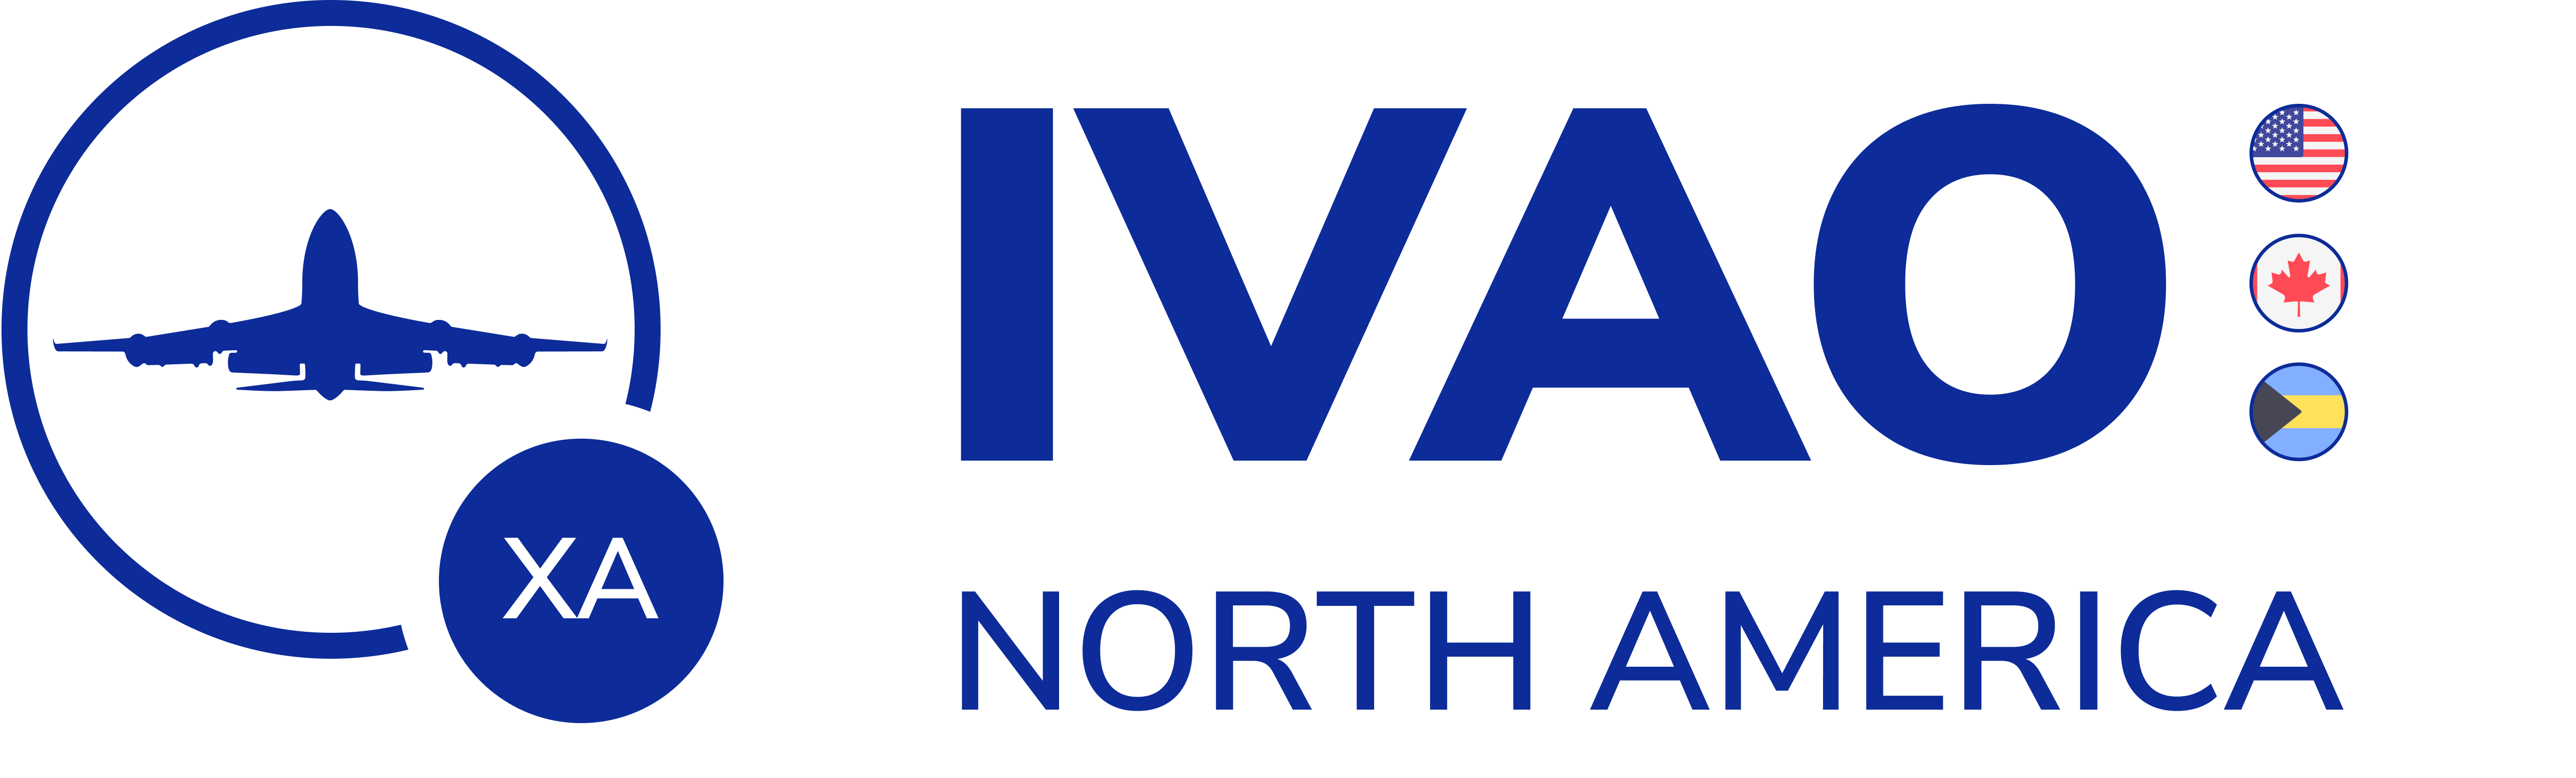 IVAO North America